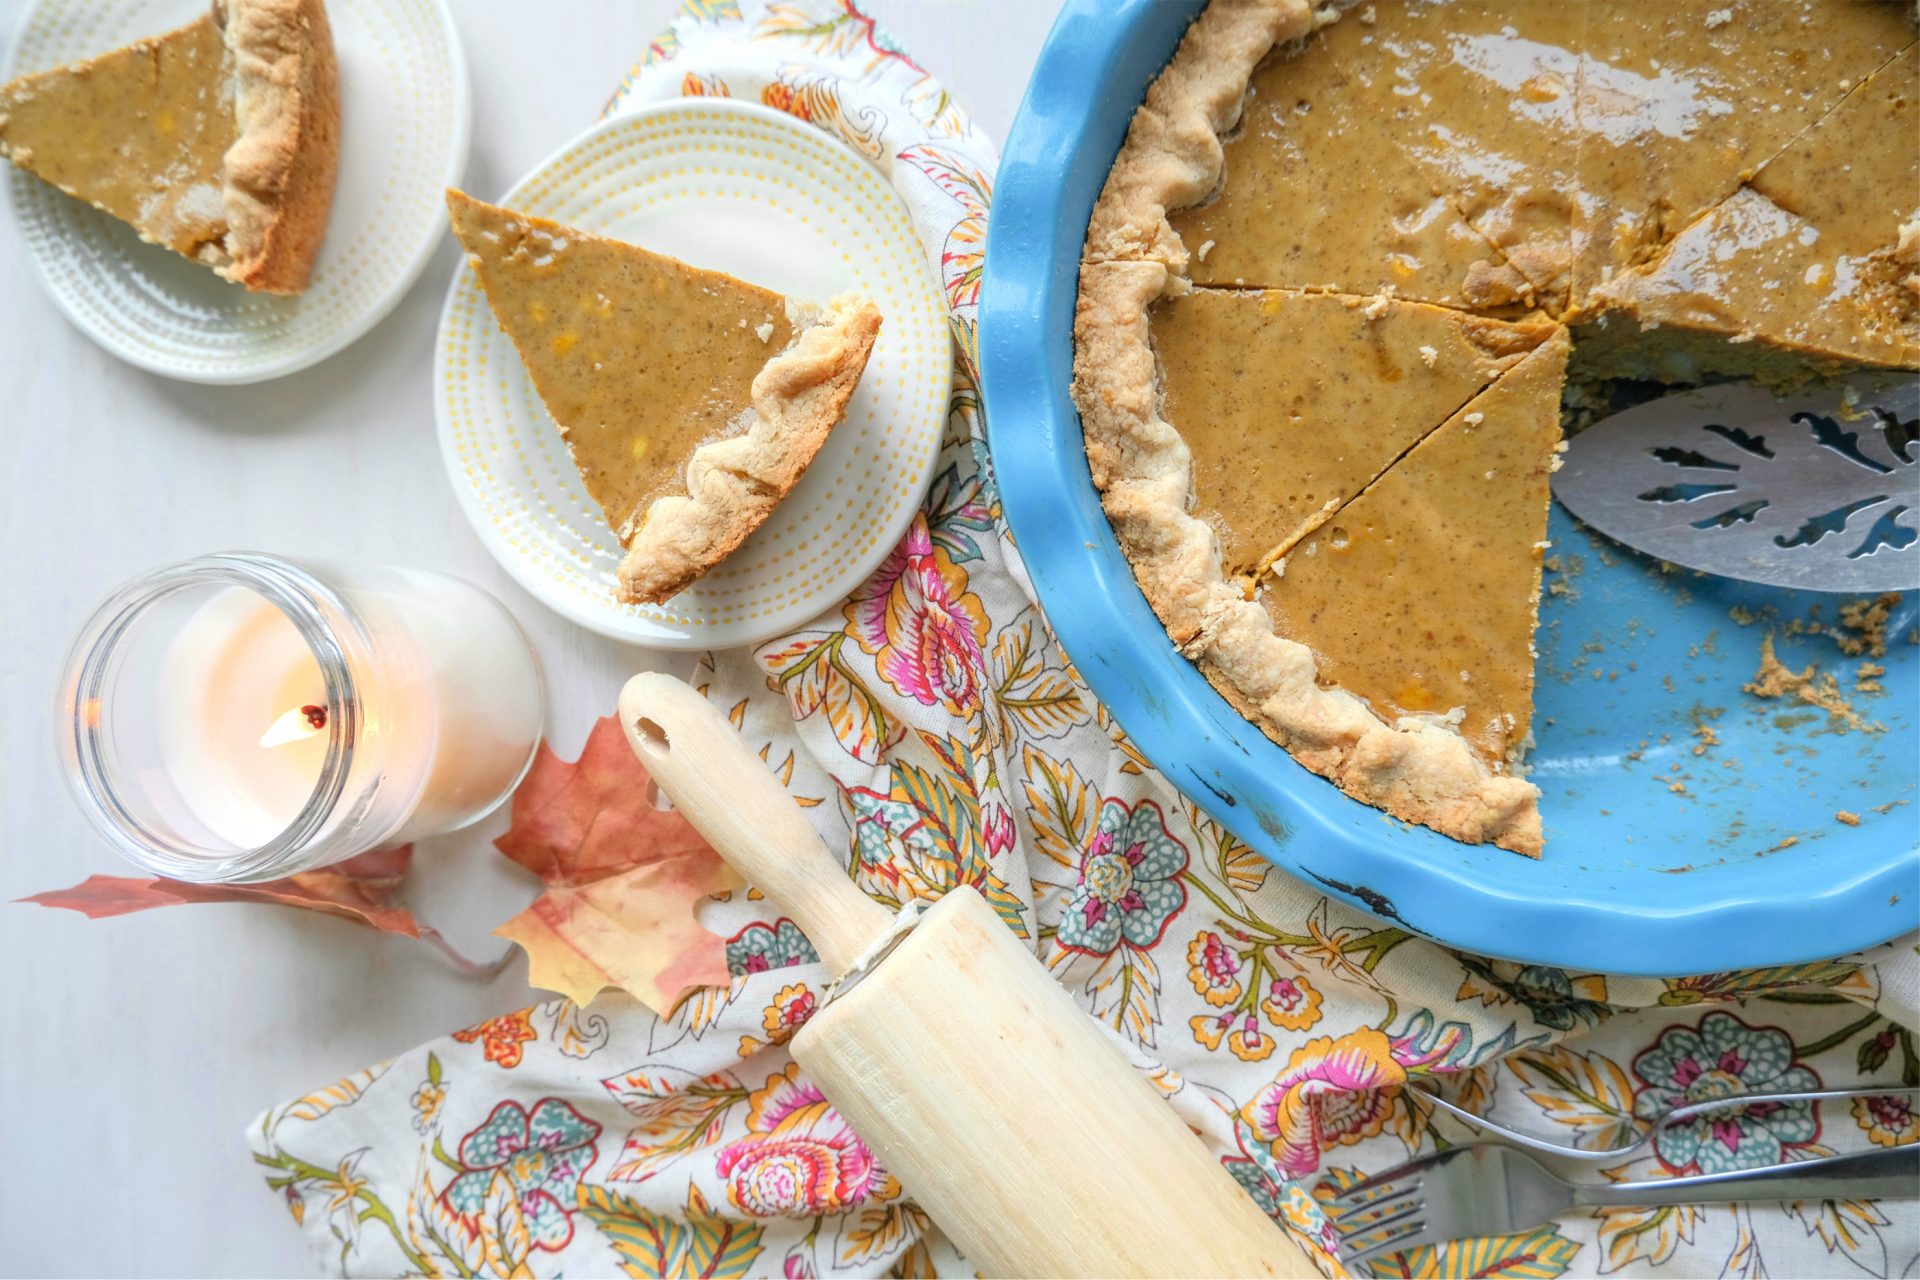 gluten free, pumpkin pie, delicious gluten-free pumpkin pie, thanksgiving, baking, fall, flaky gluten-free pumpkin pie, gluten-free pie crust